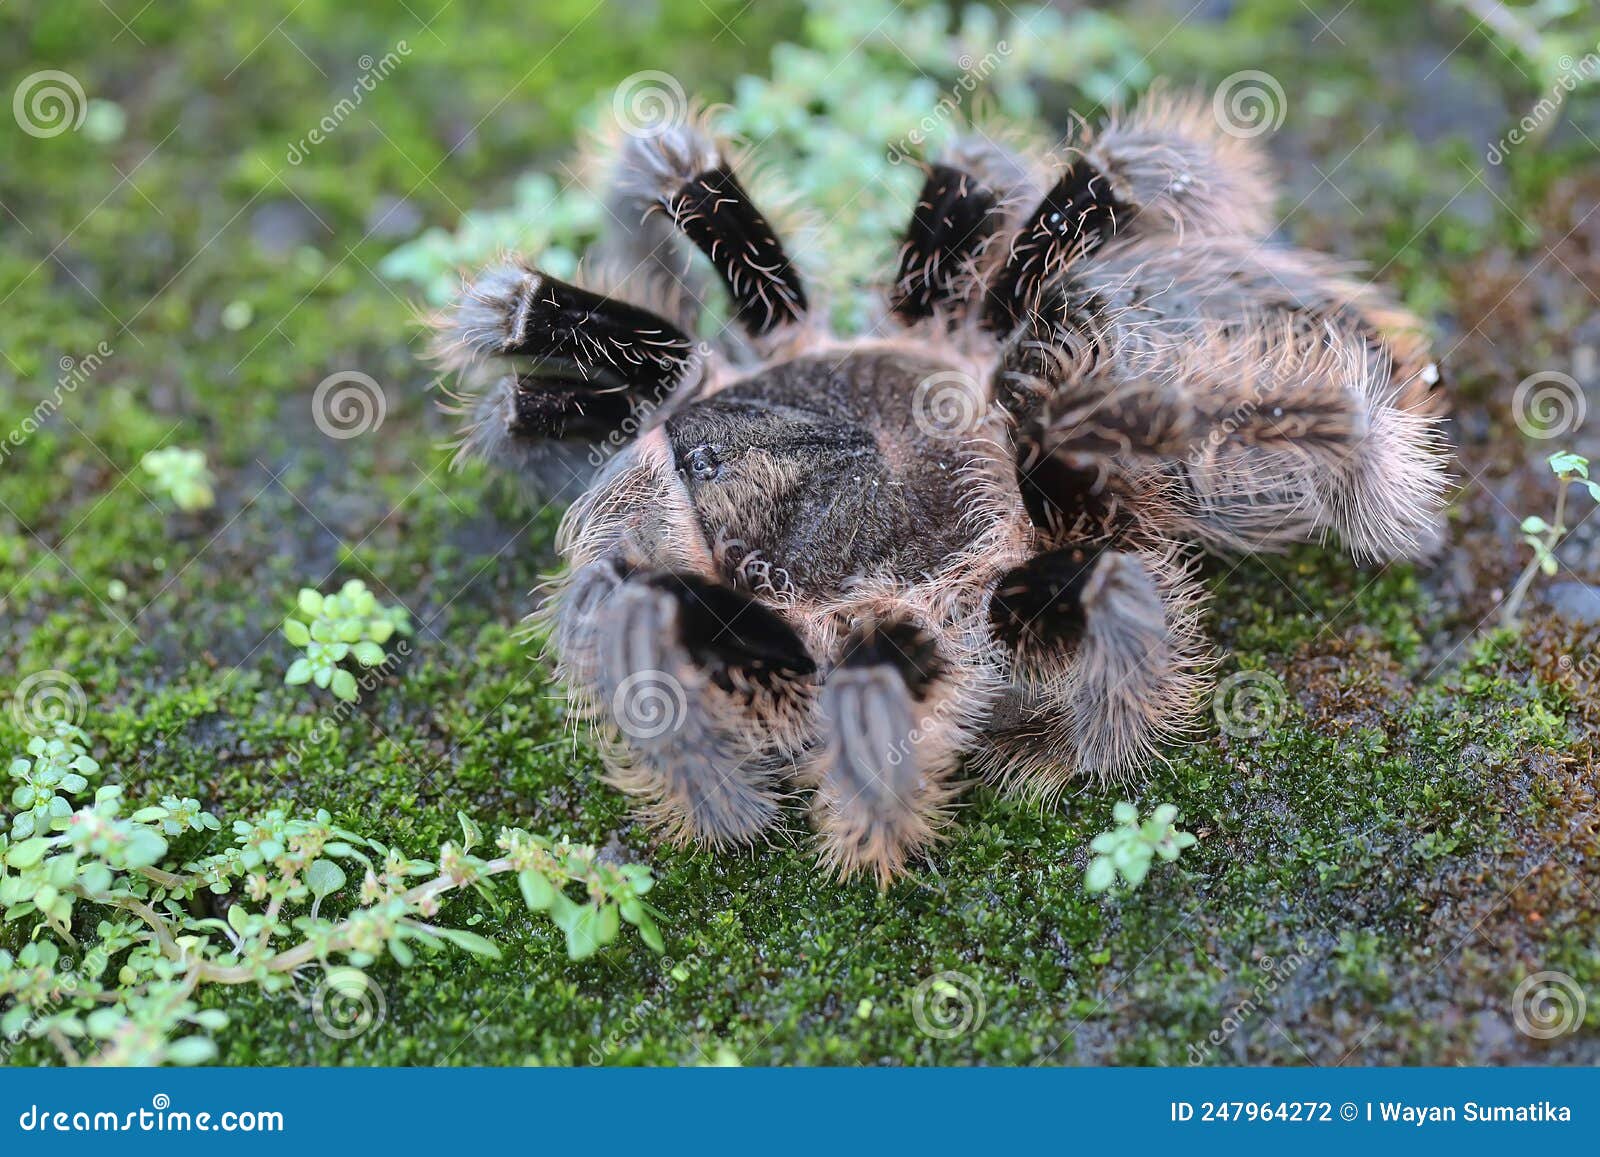 A Tarantula is Showing Aggressive Behavior. Stock Photo - Image of ...